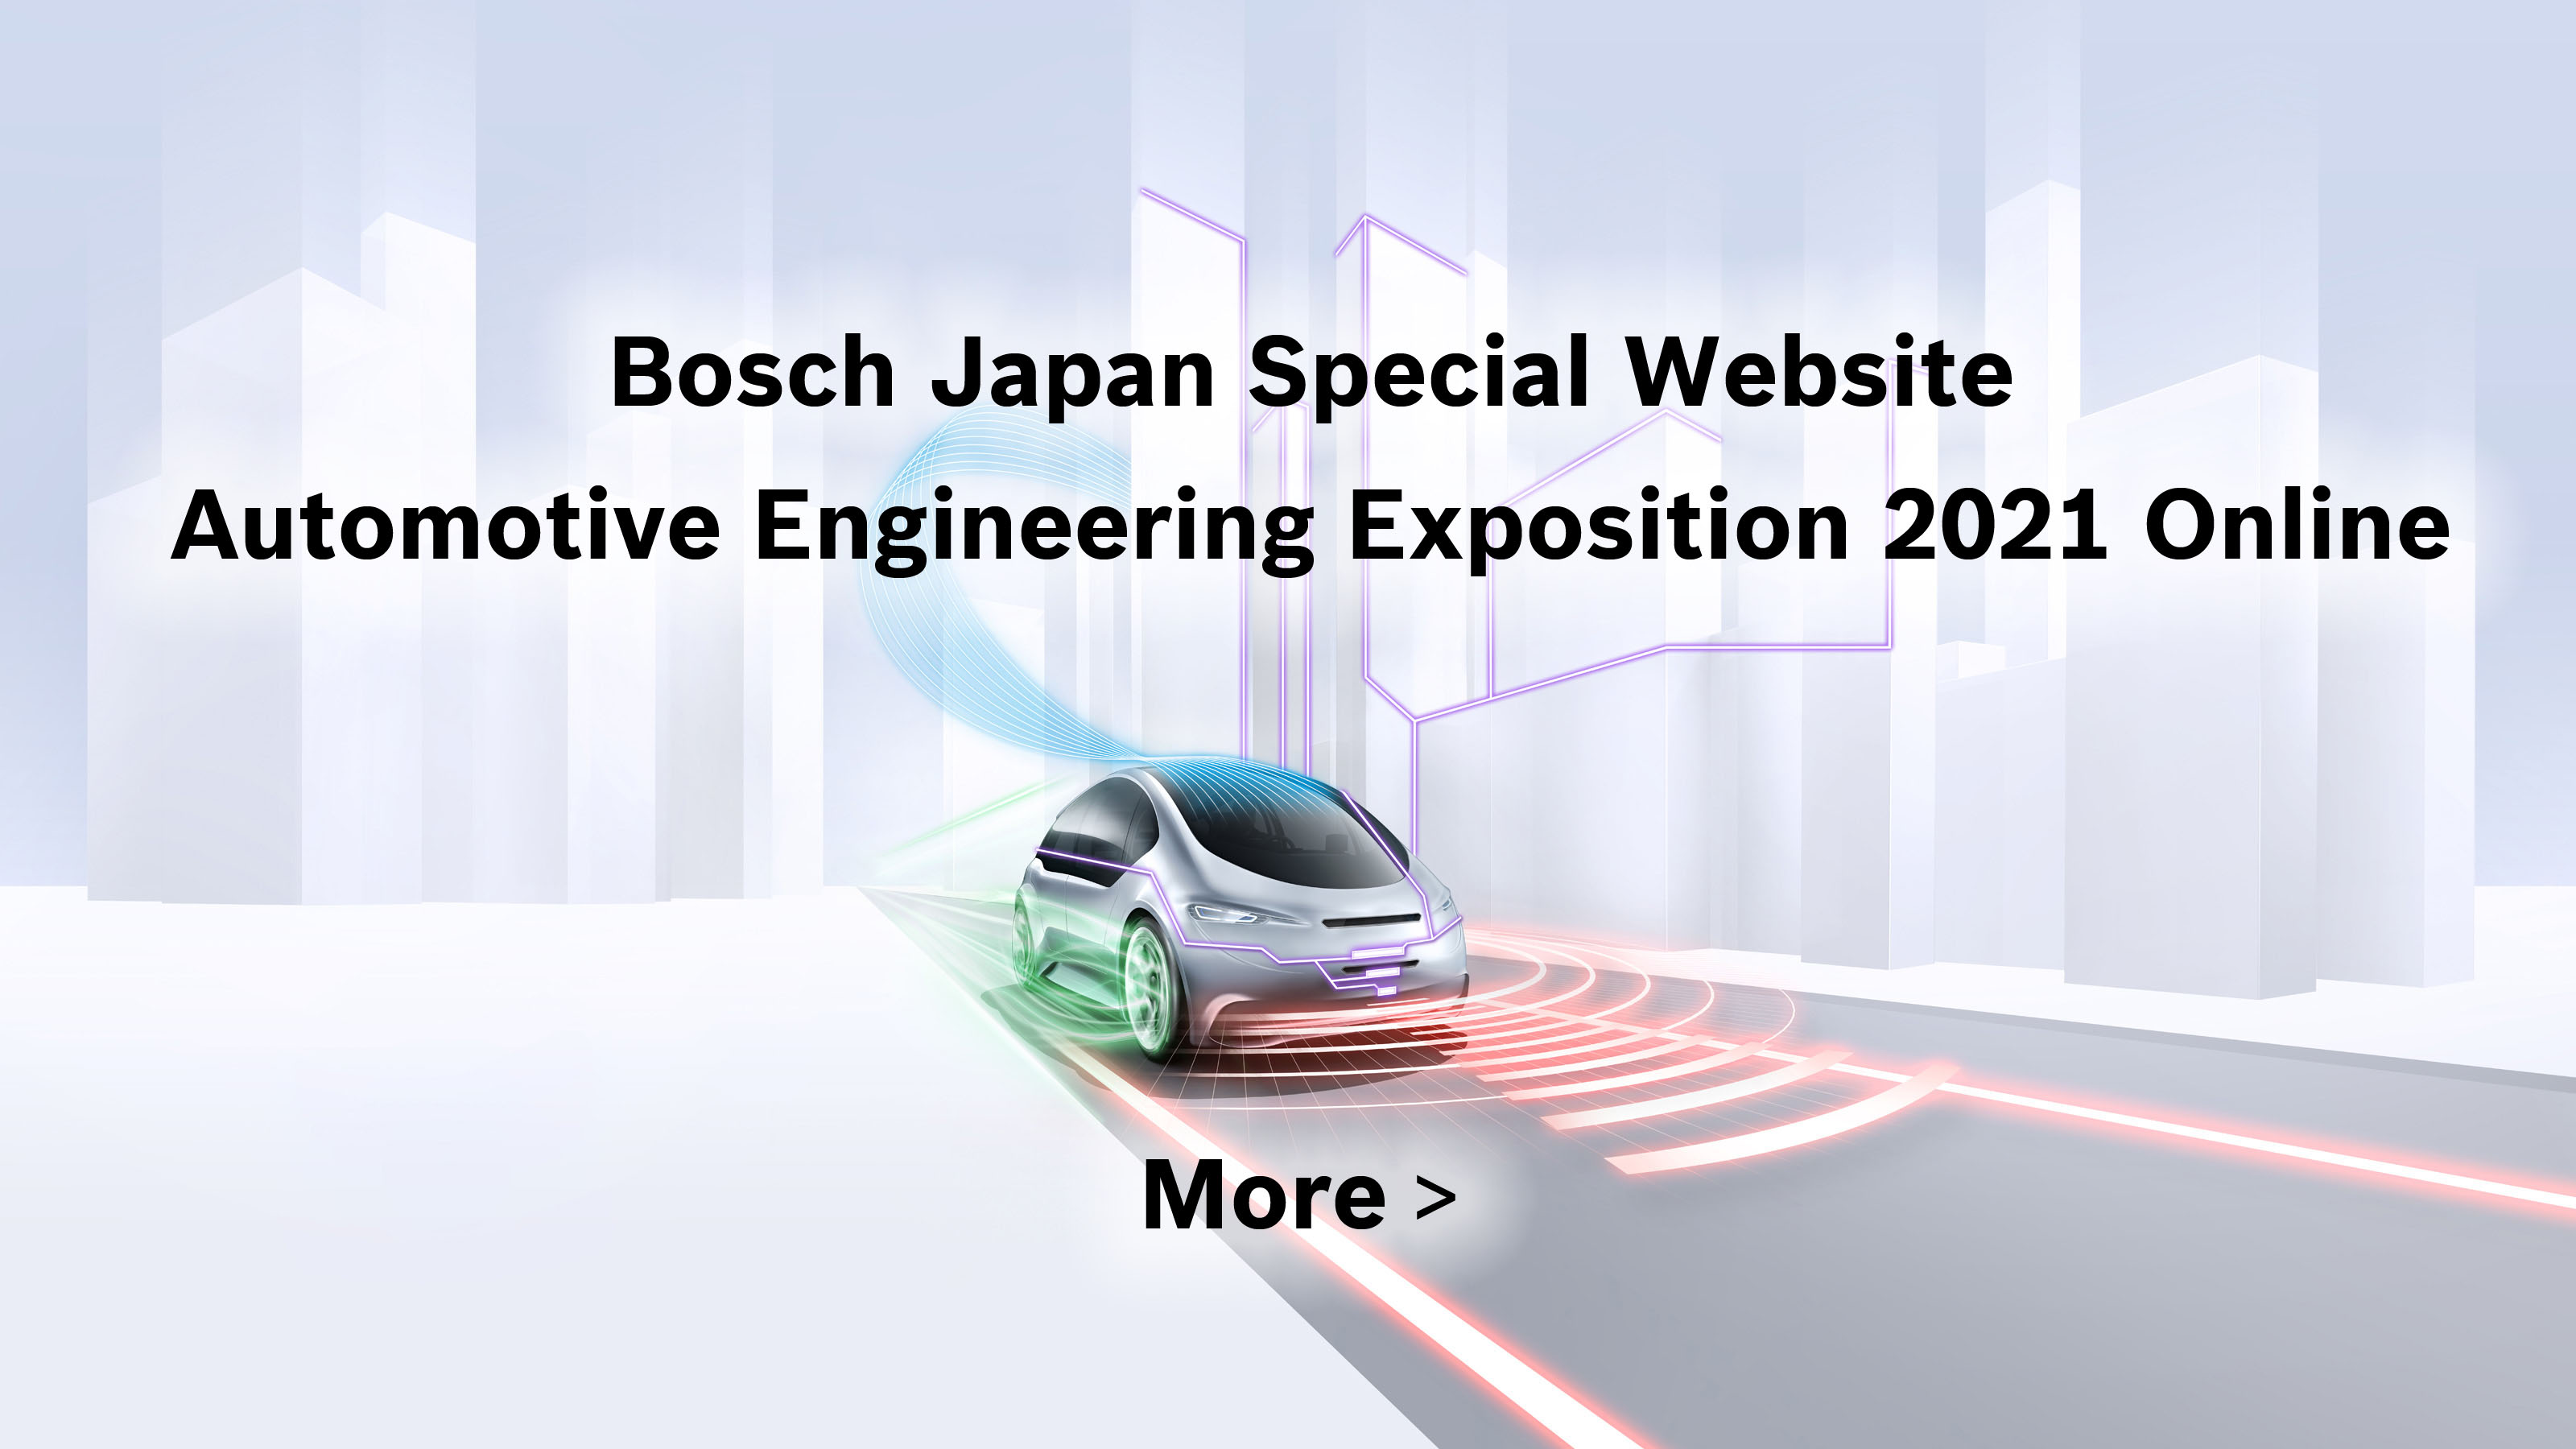 Bosch Japan Special Website Bosch at Automotive Engineering Exposition 2021 Online